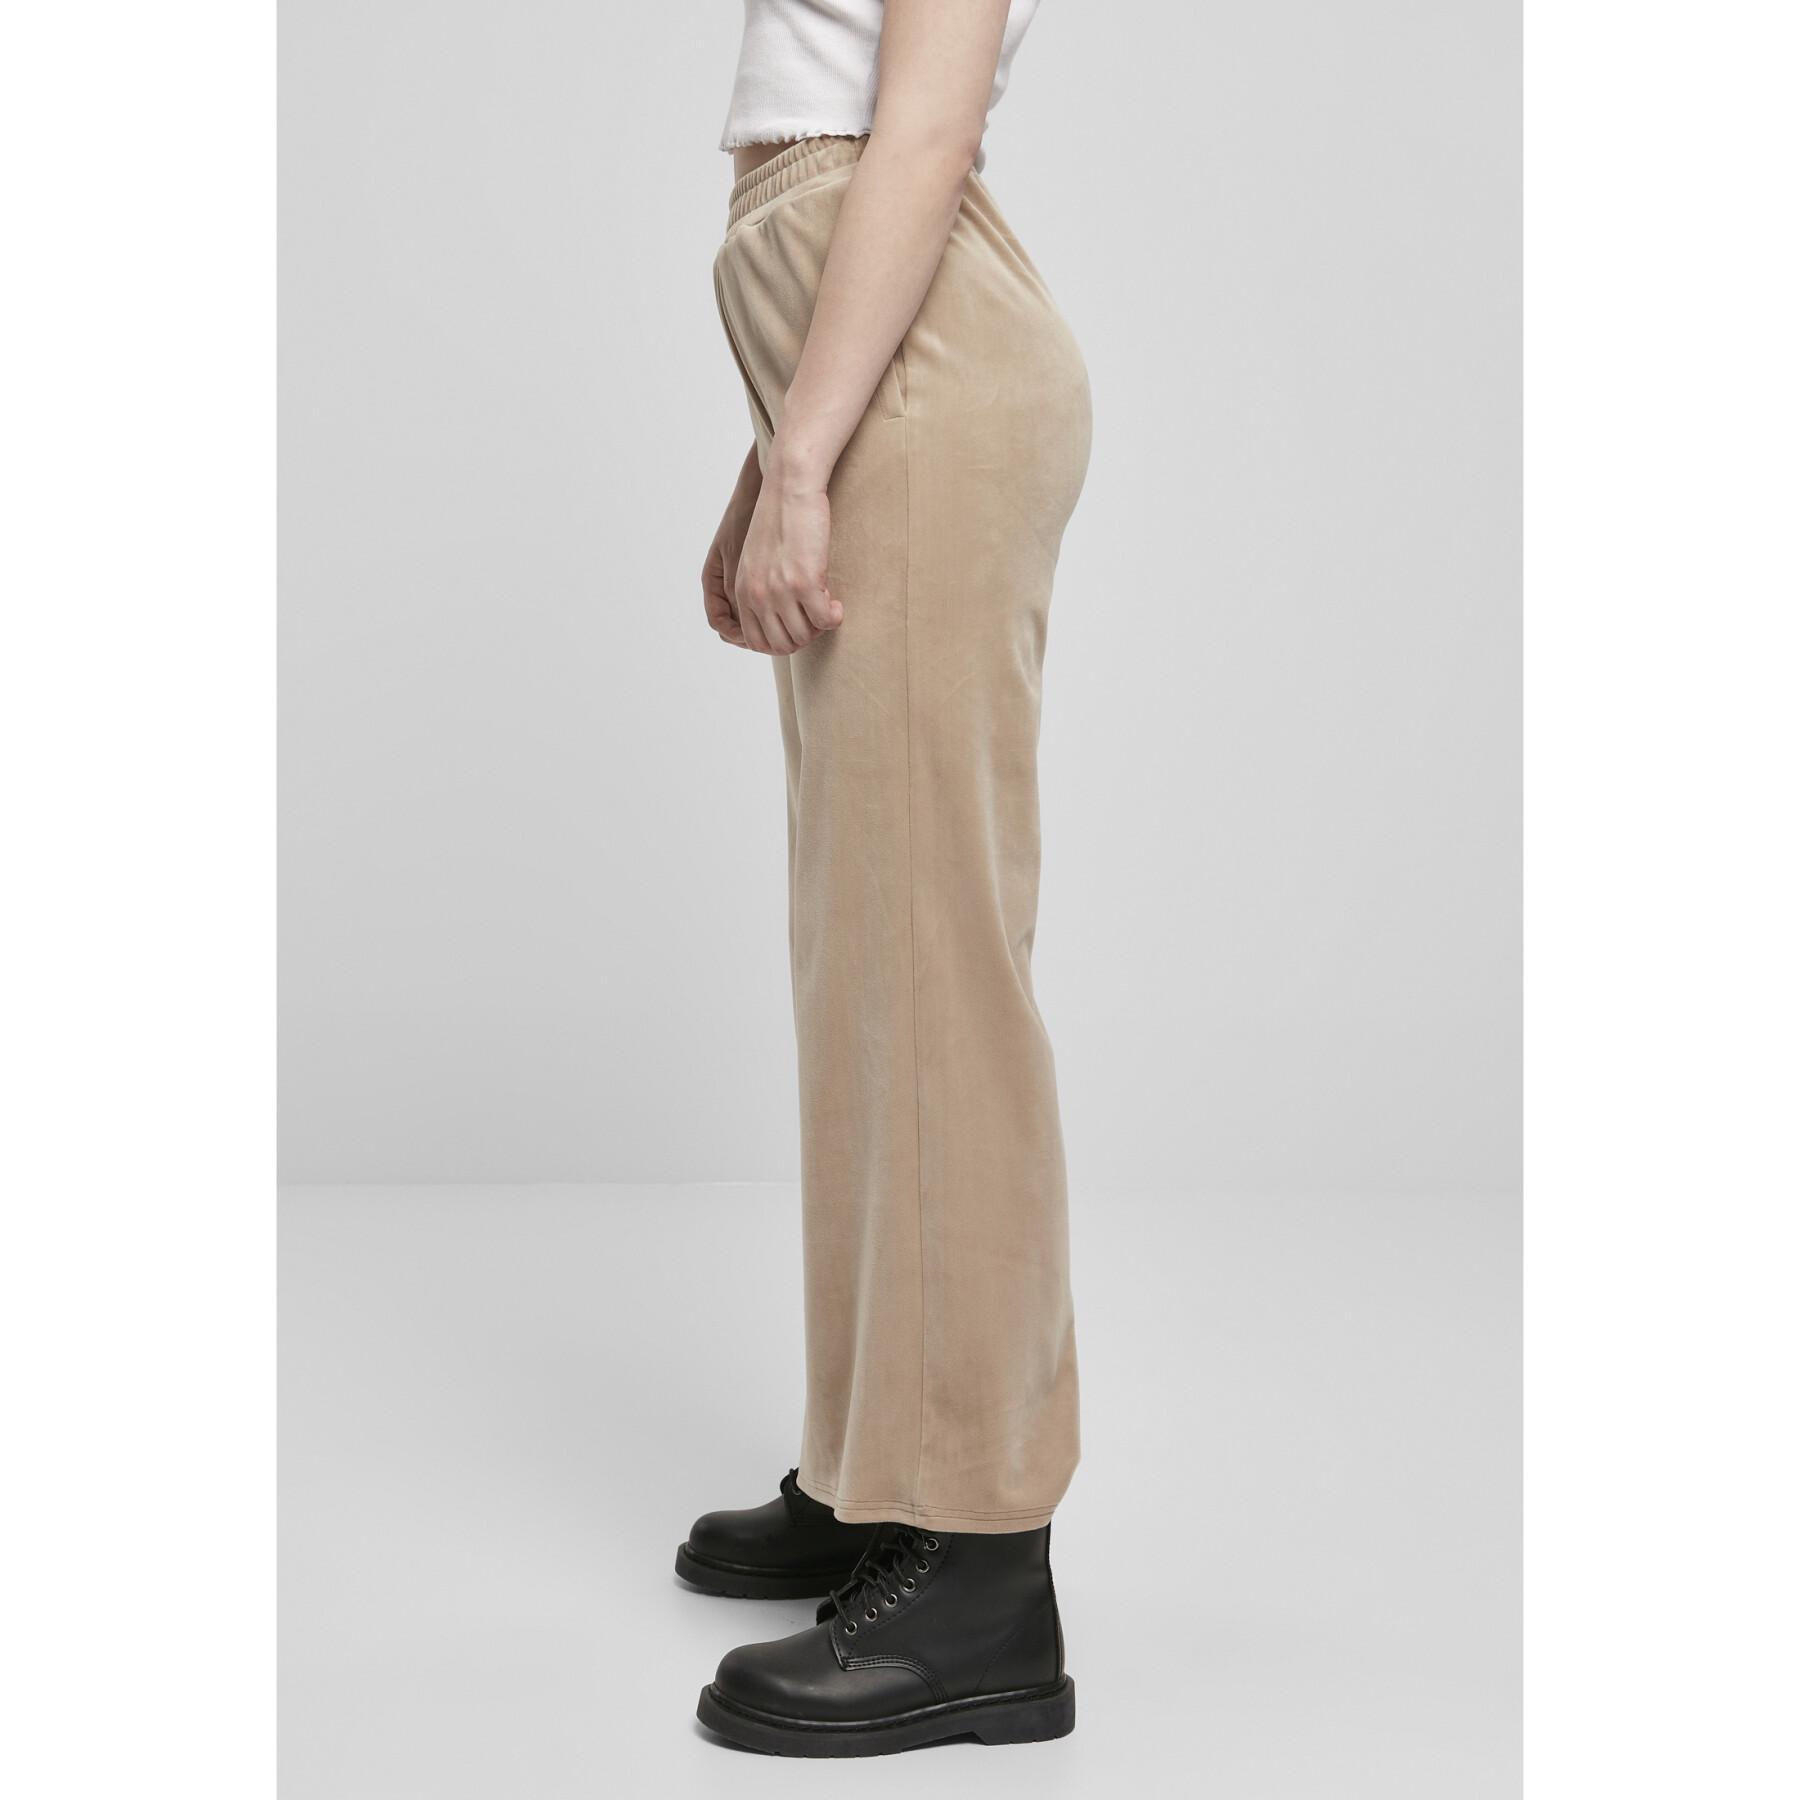 Calças femininas Urban Classics high waist straight velvet